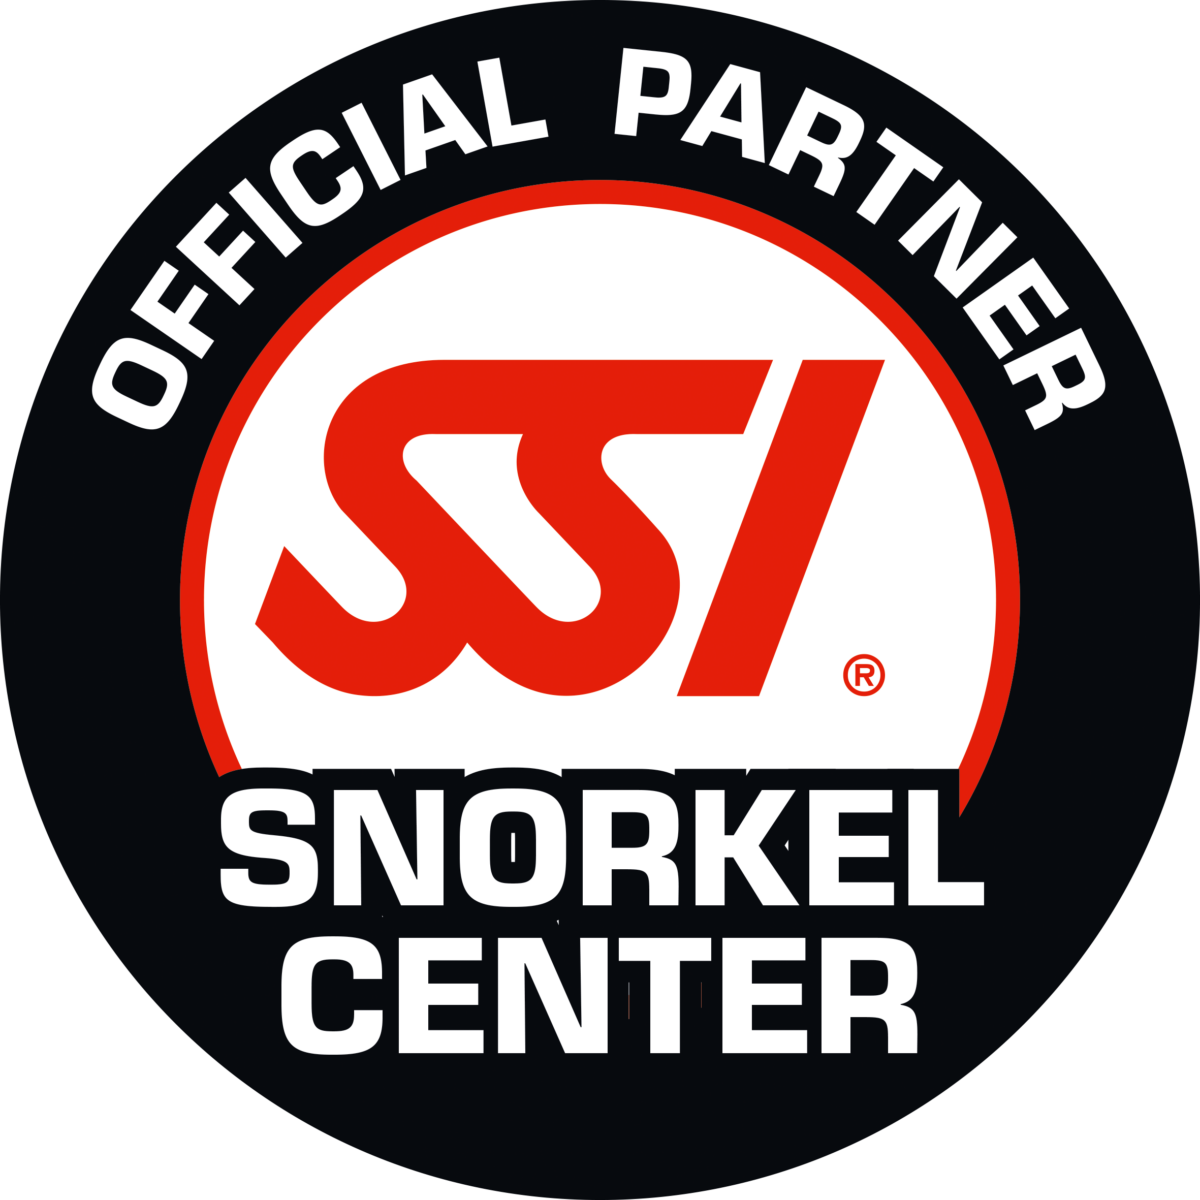 SSI Snorkel Center